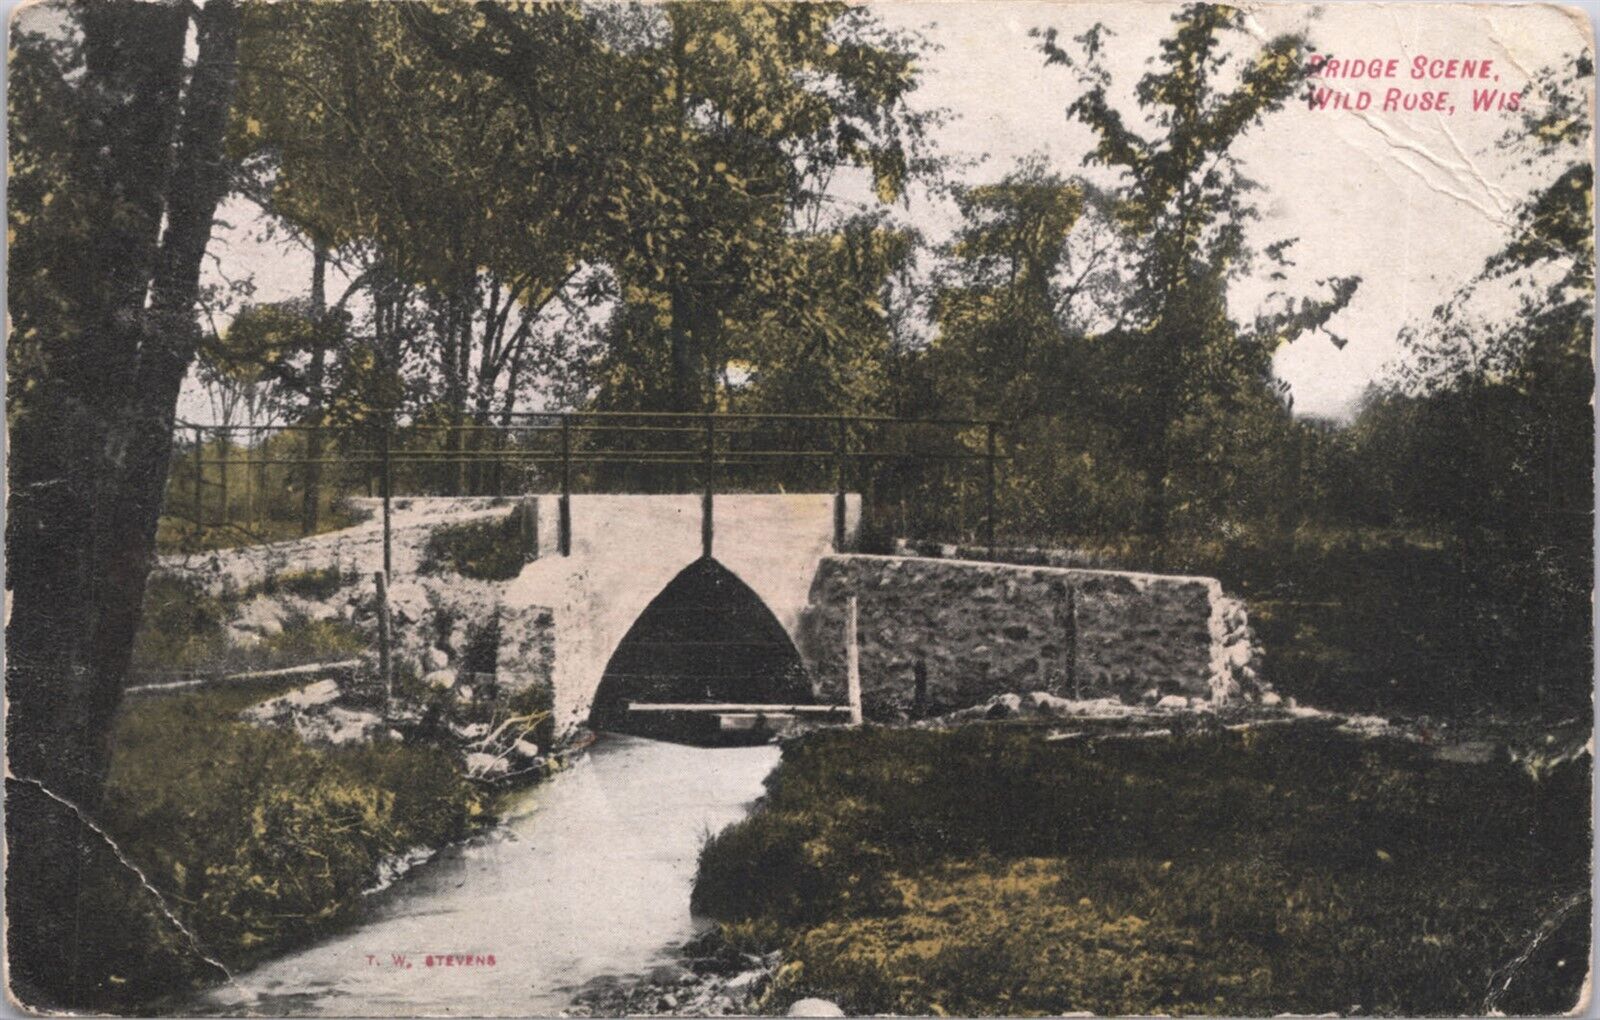 Wild Rose WI Bridge Scene Bridge Over the Pine River at the Mill Pond 1908